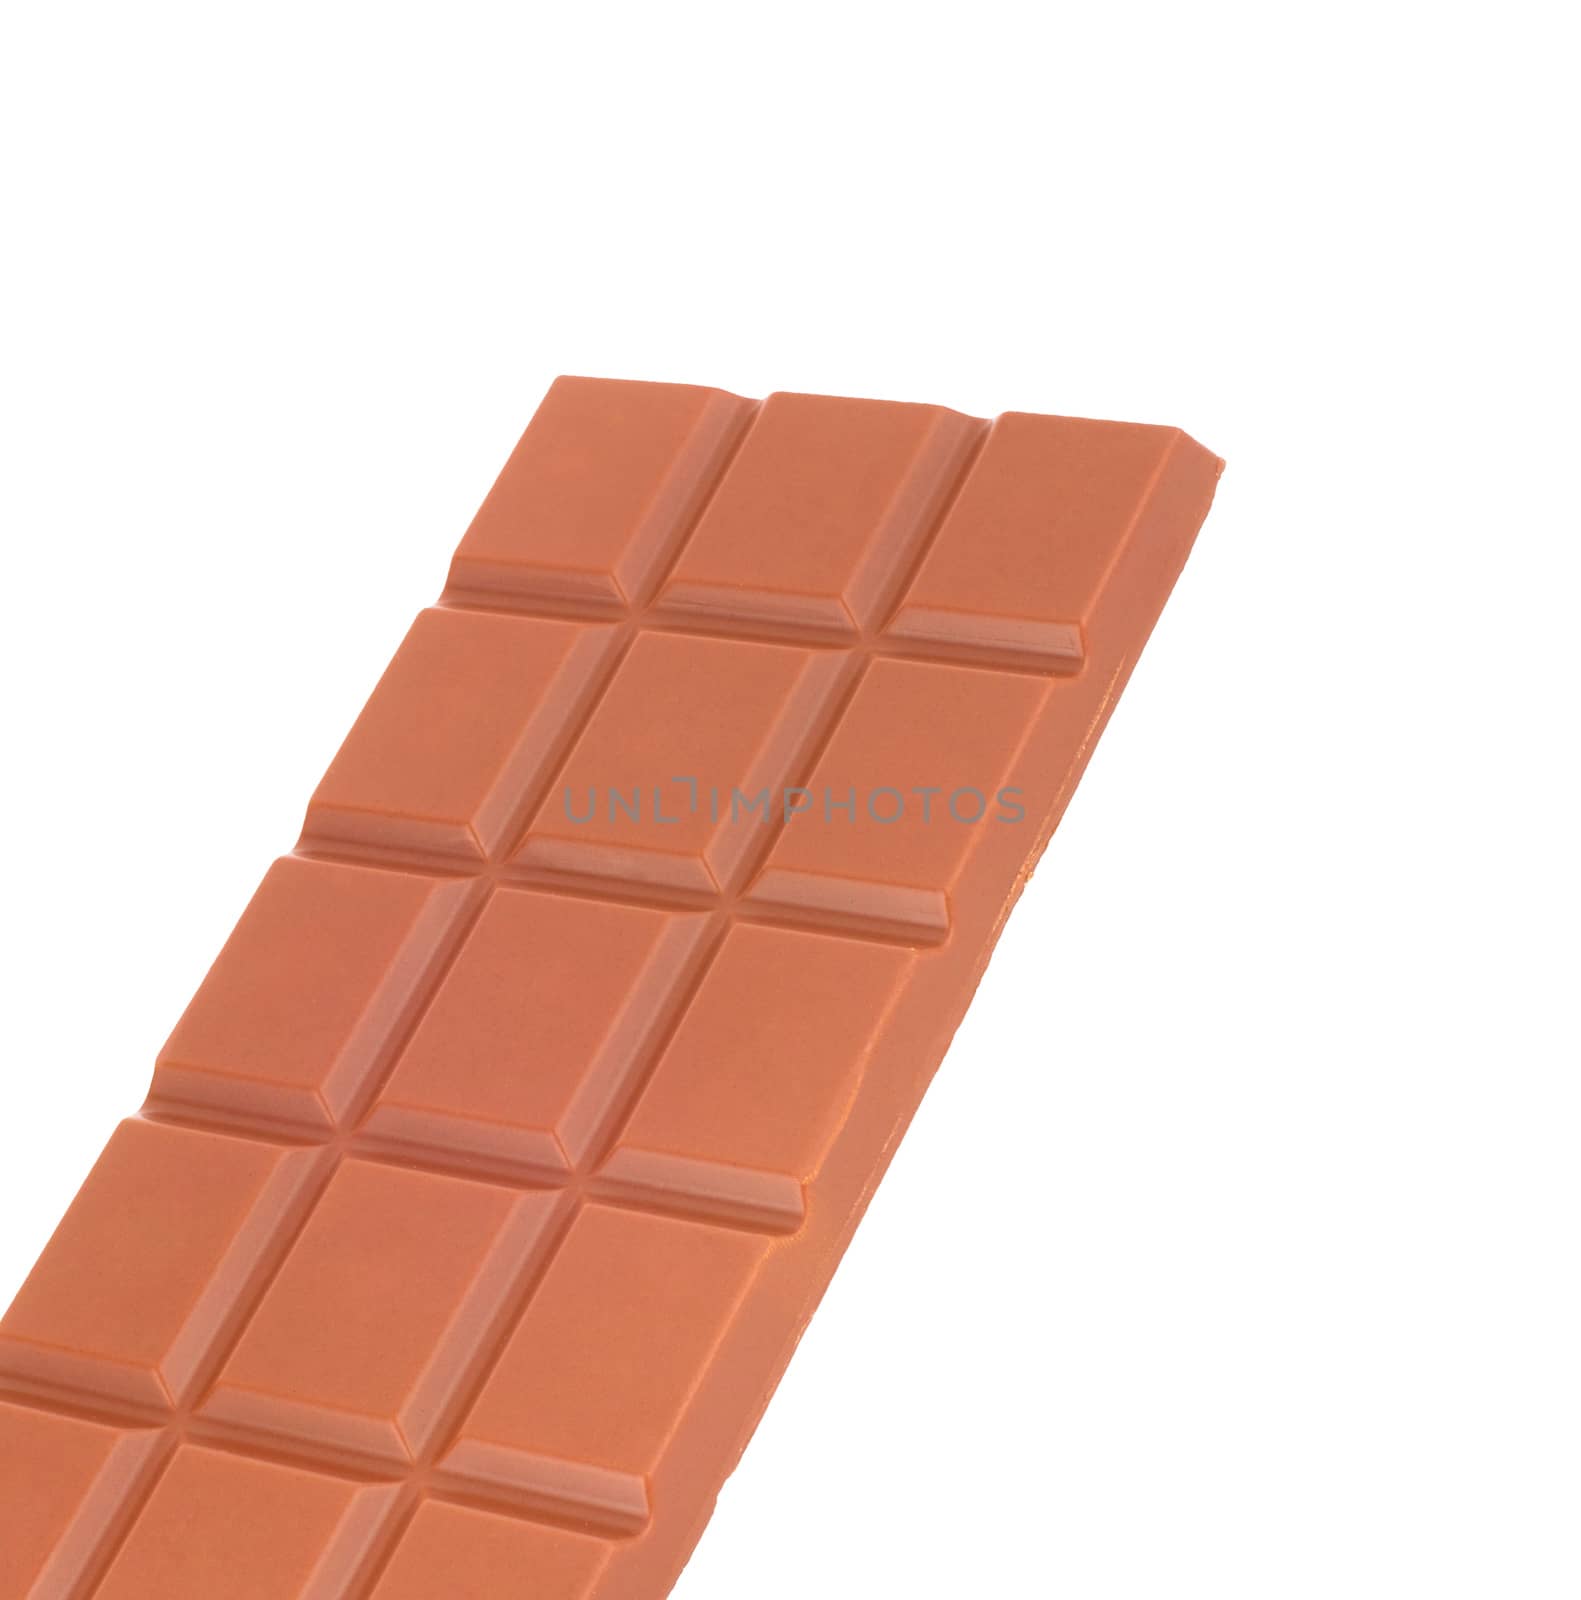 chocolate bars close up by ozaiachin